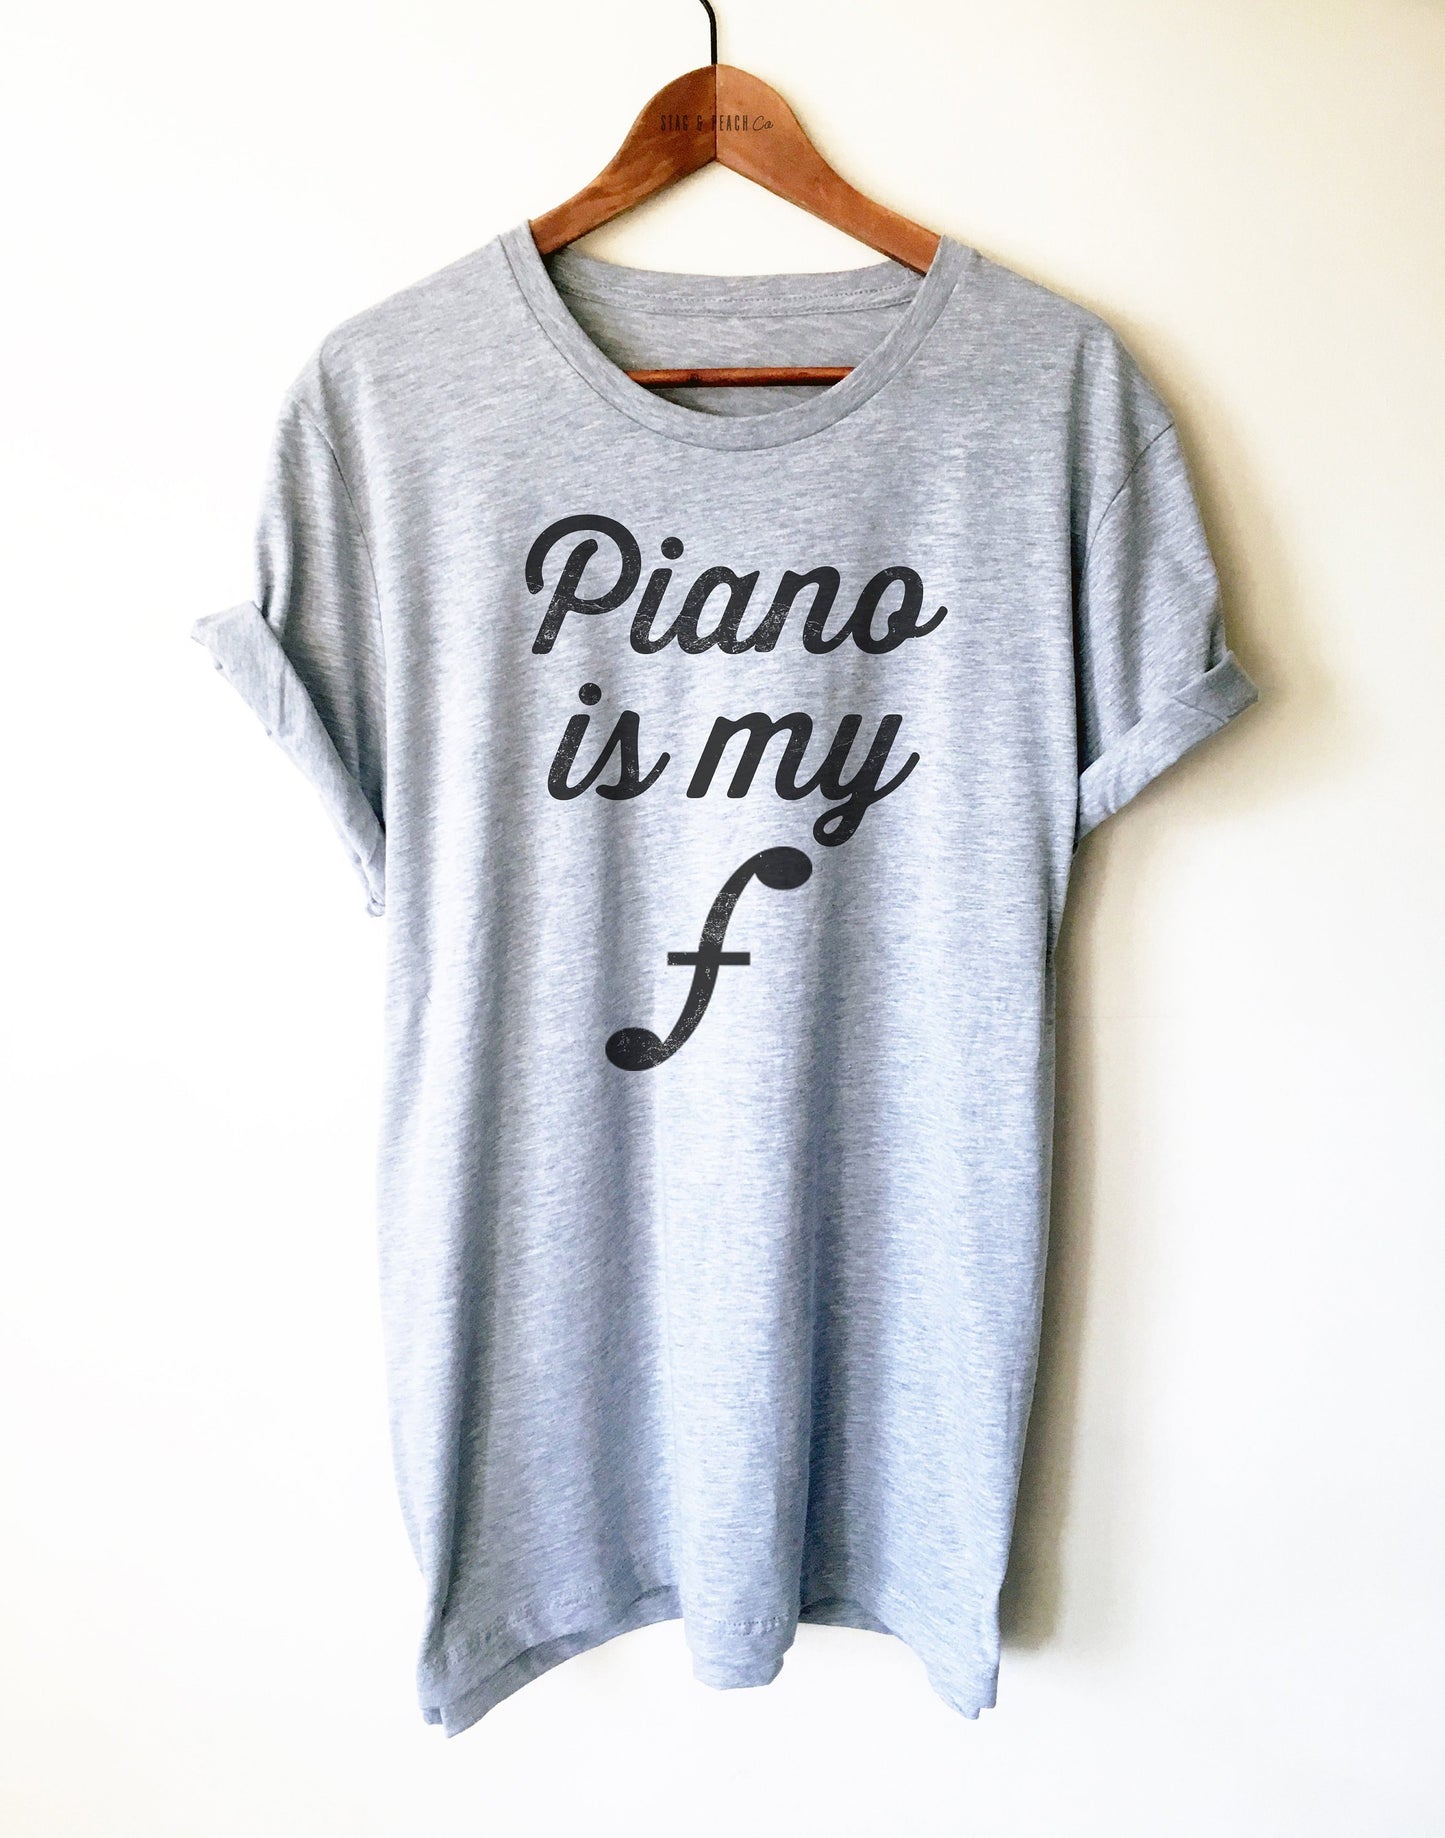 Piano Is My Forte Unisex Shirt - Piano Player Shirt, Pianist Gift, Piano Teacher Shirt, Musician Gift, Funny Piano Player Tee, Music Shirt